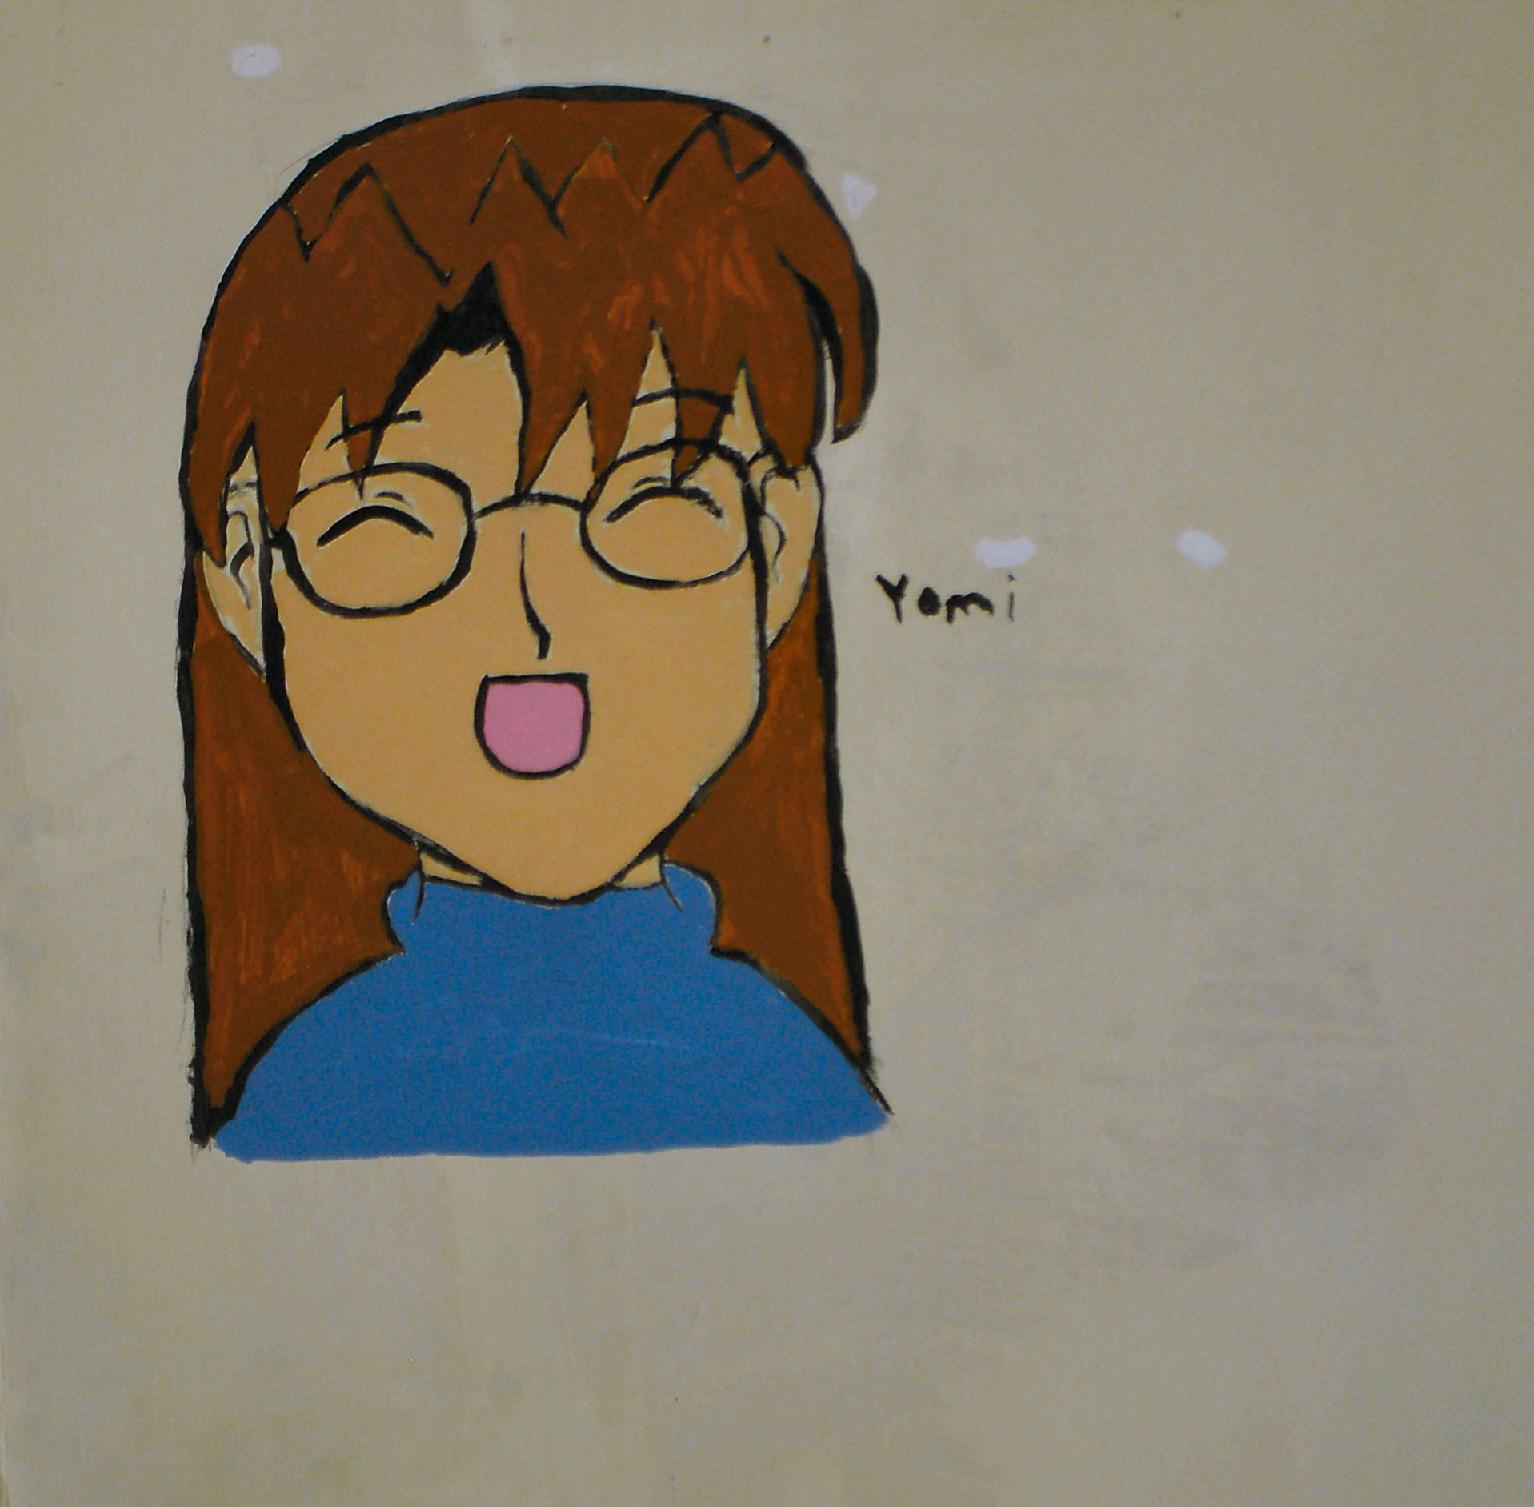 My Yomi painting by SSGoshin4